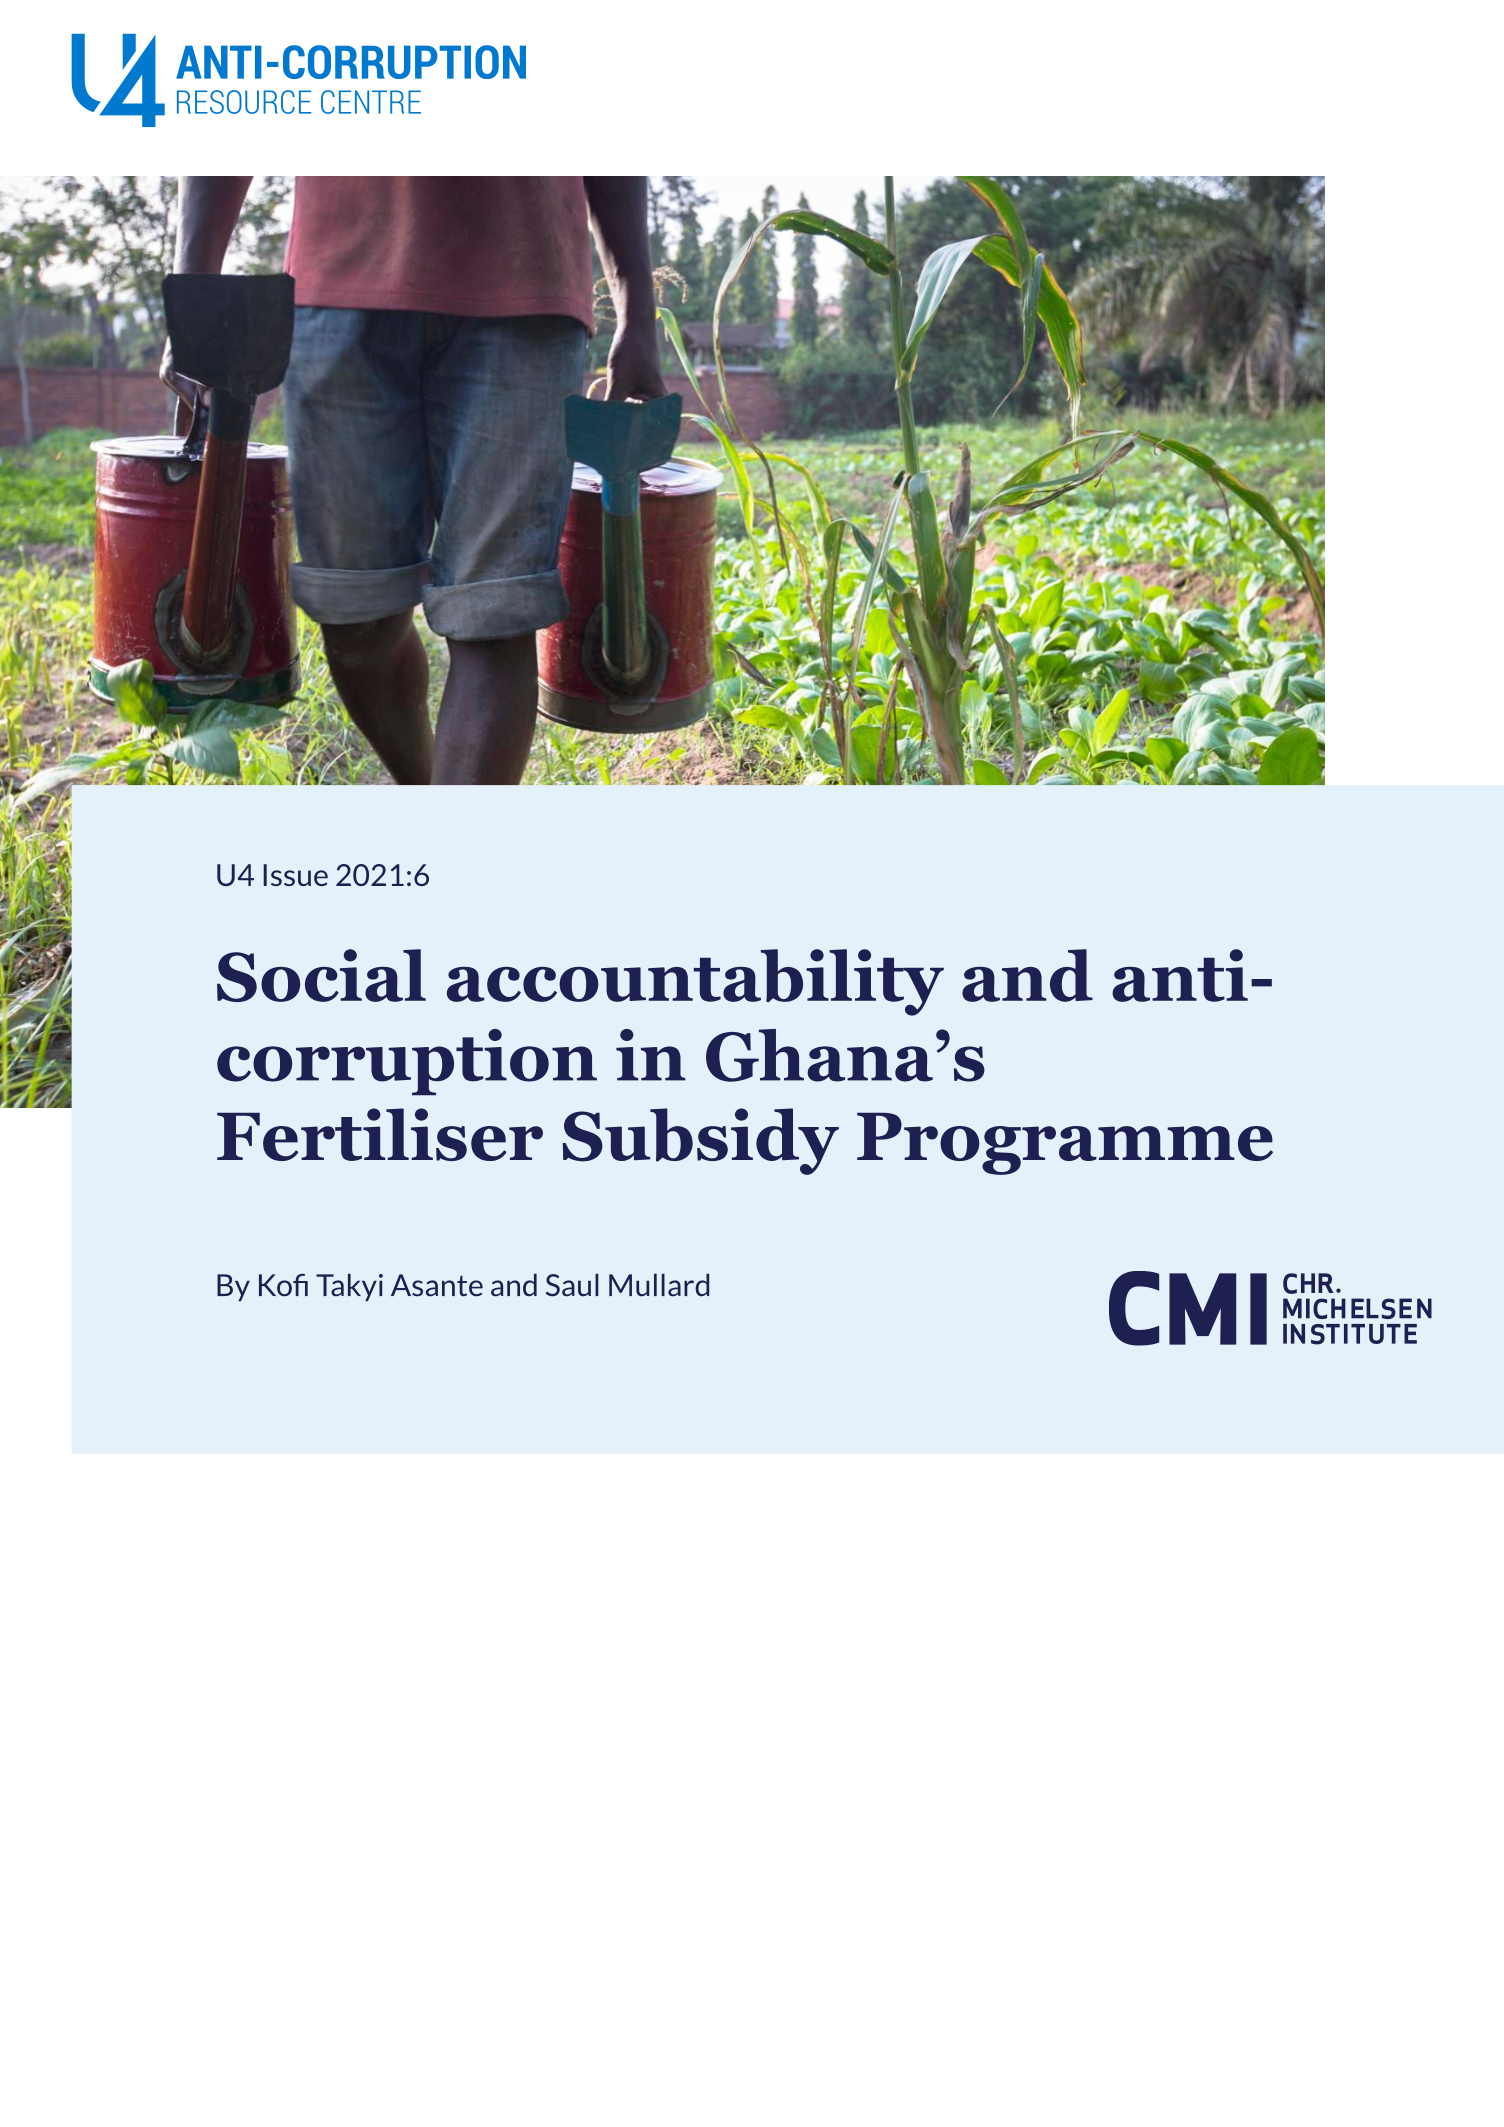 Social accountability and anti-corruption in Ghana’s Fertiliser Subsidy Programme